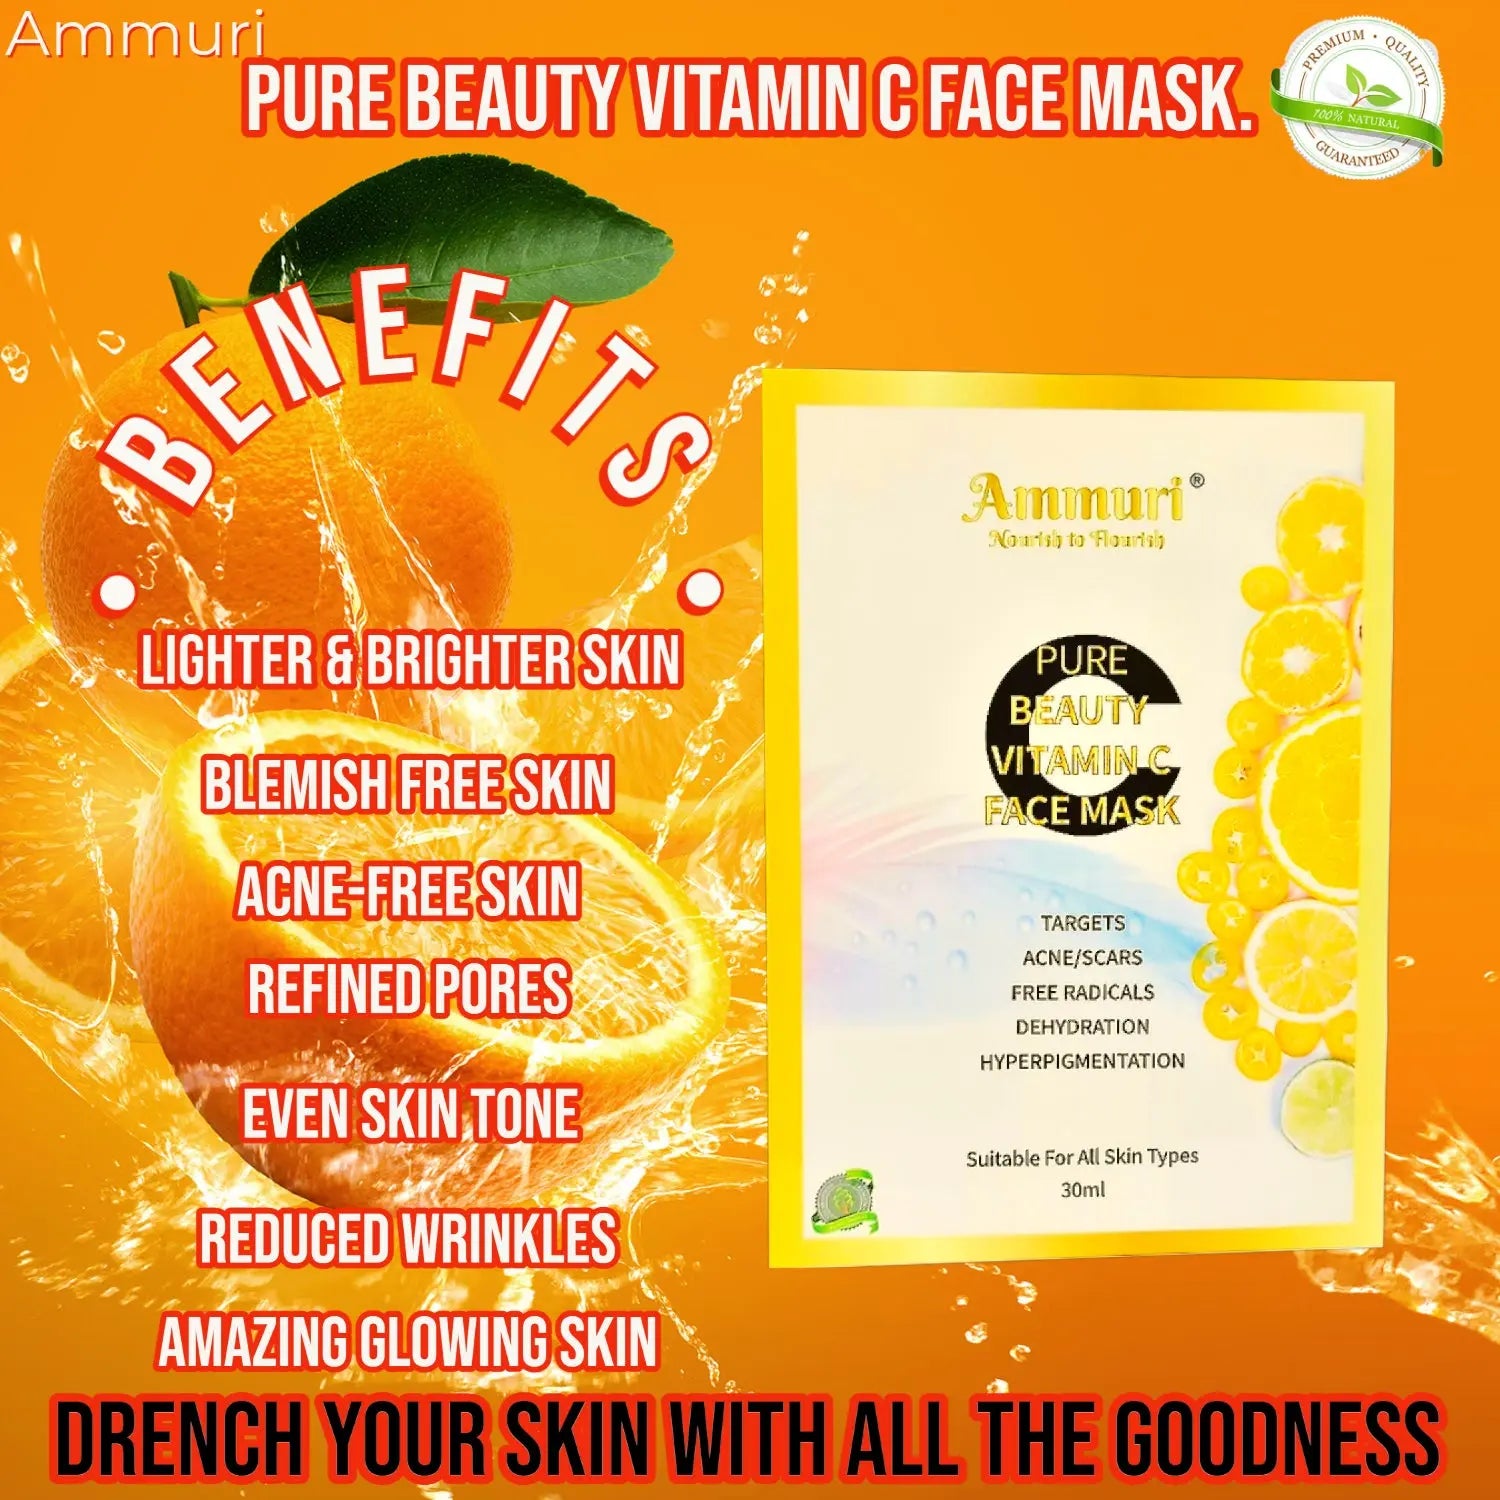 Ammuri Vitamin C Silk Face Mask Sheets Hyaluronic acid Antioxidant Anti Age Anti Wrinkle Ammuri Skincare